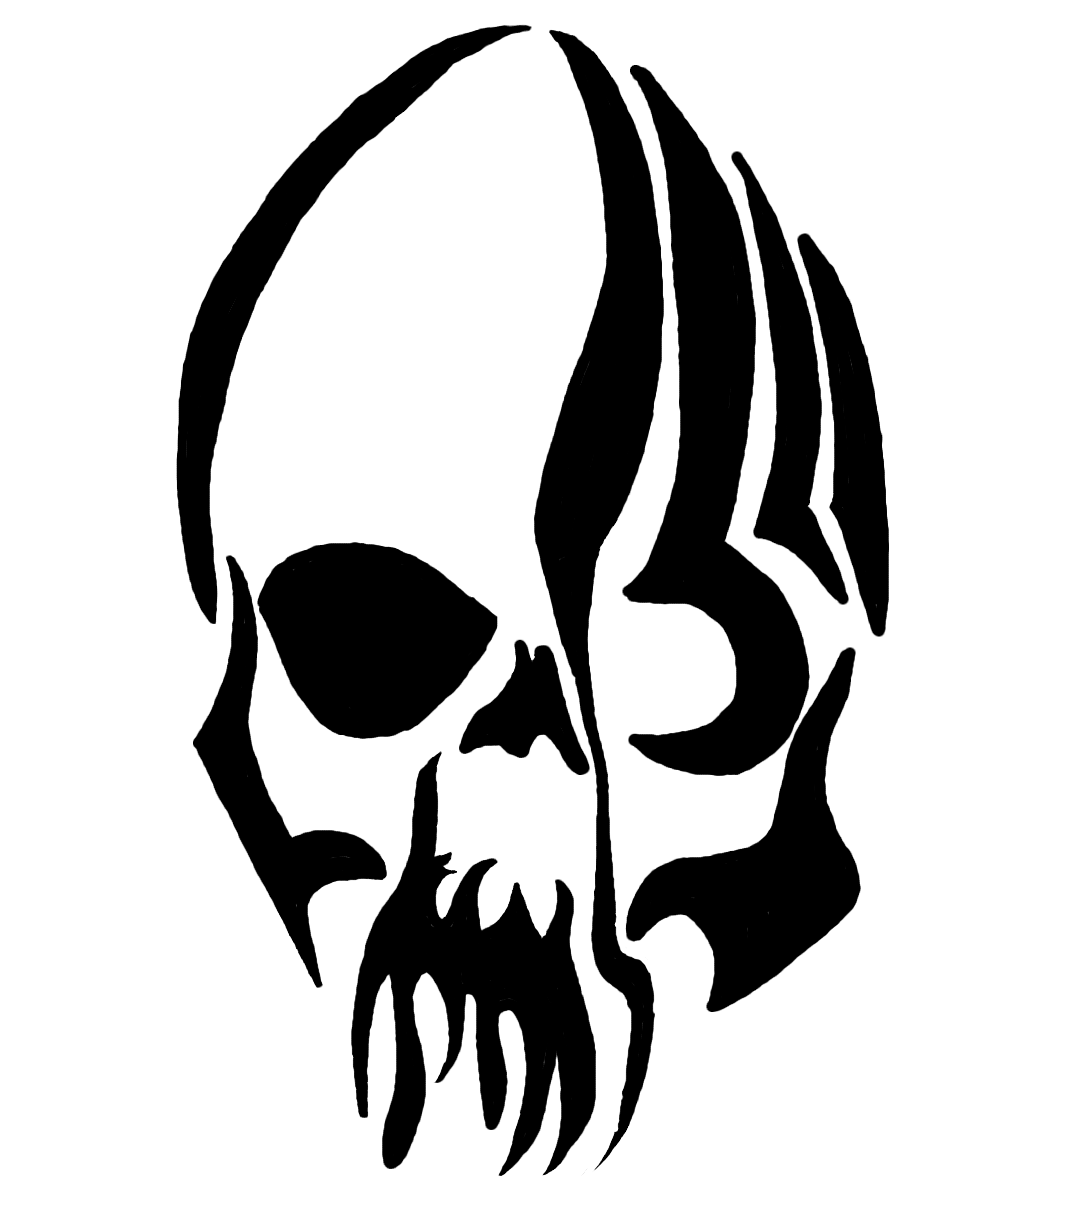 Skull Tattoo Images - Free Download on Freepik